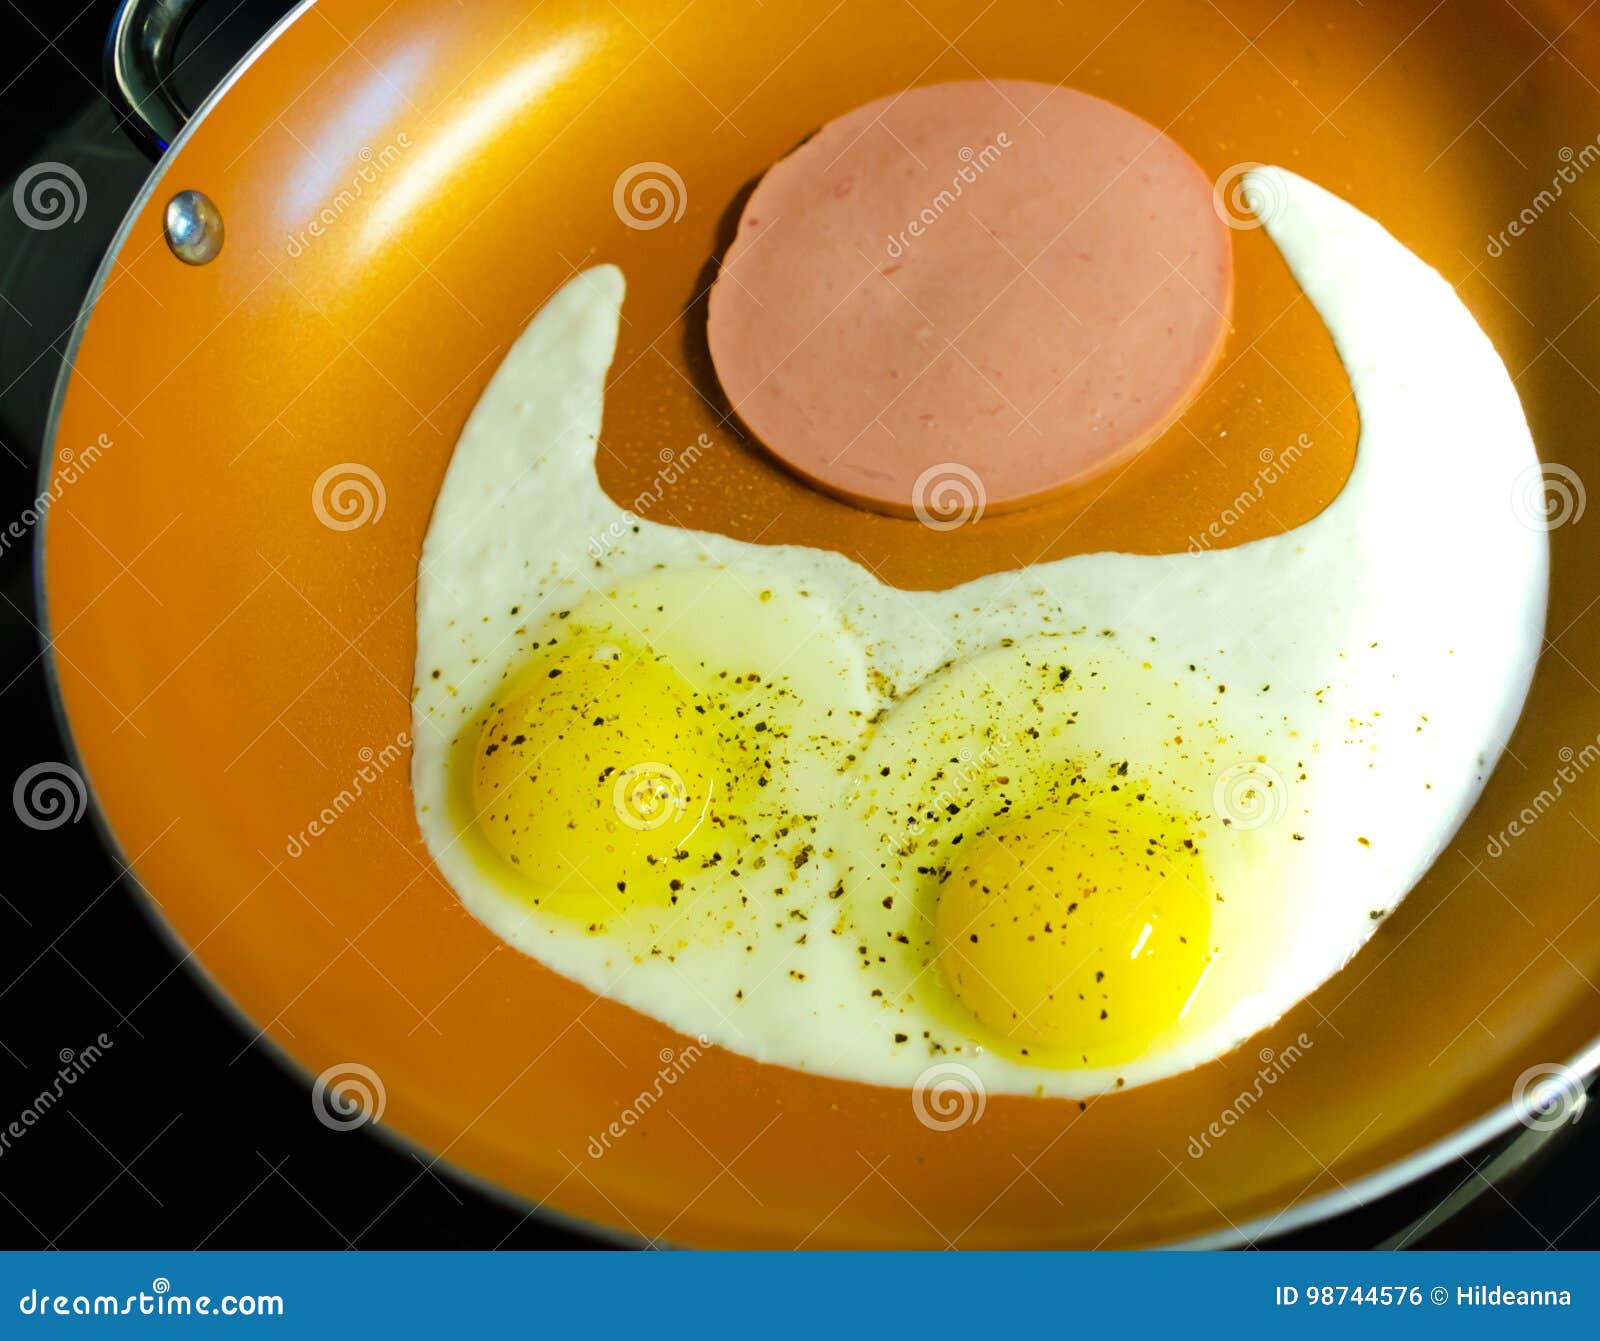 Килокалории 2 яйца. 100 Грамм яичницы. Яичница глазунья вес. Калории в глазуньи из двух яиц. Яичница калории.